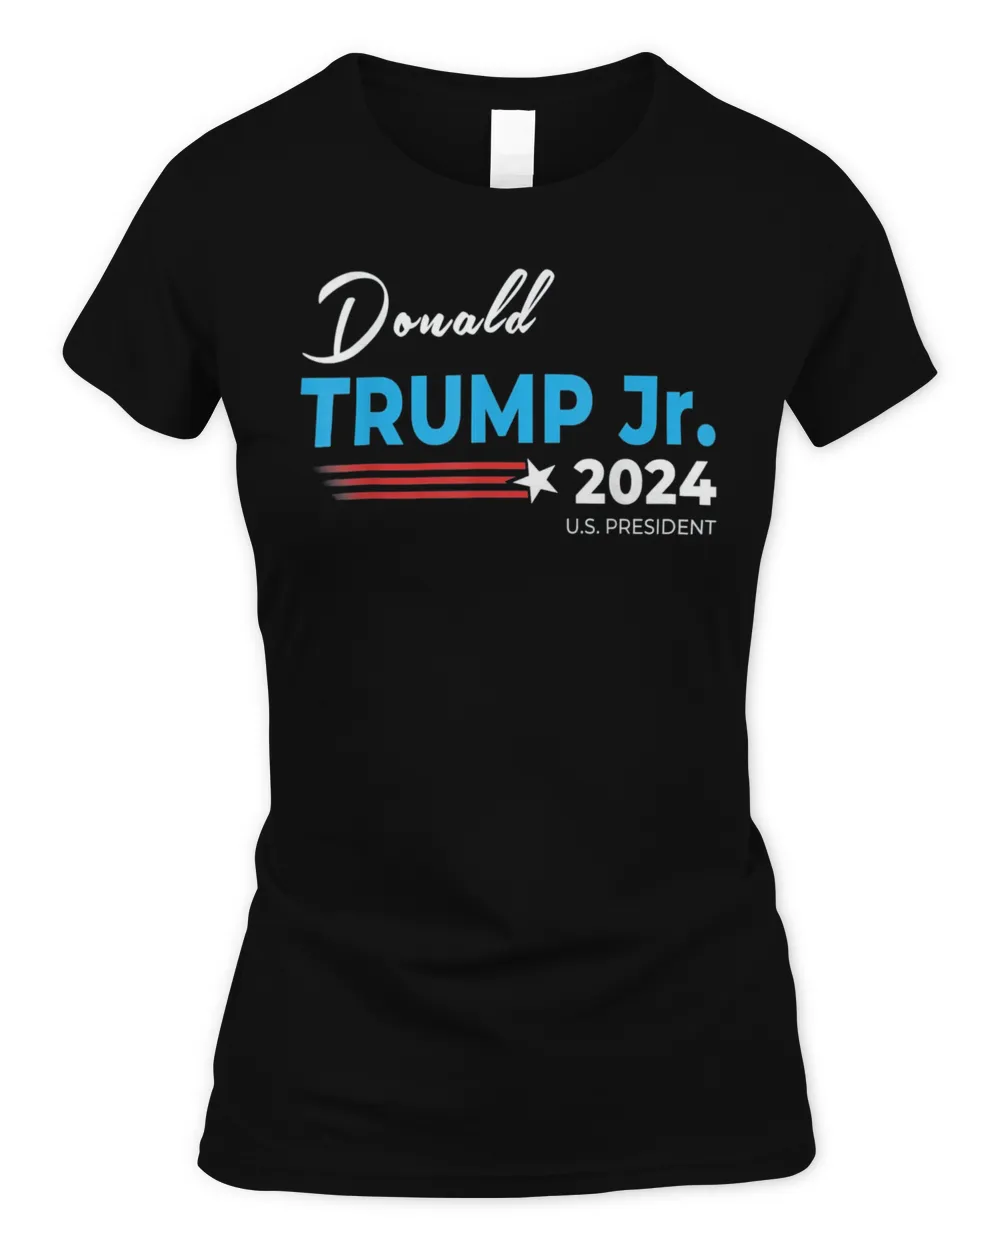 Donald Trump Jr. For President 2024 T-Shirt